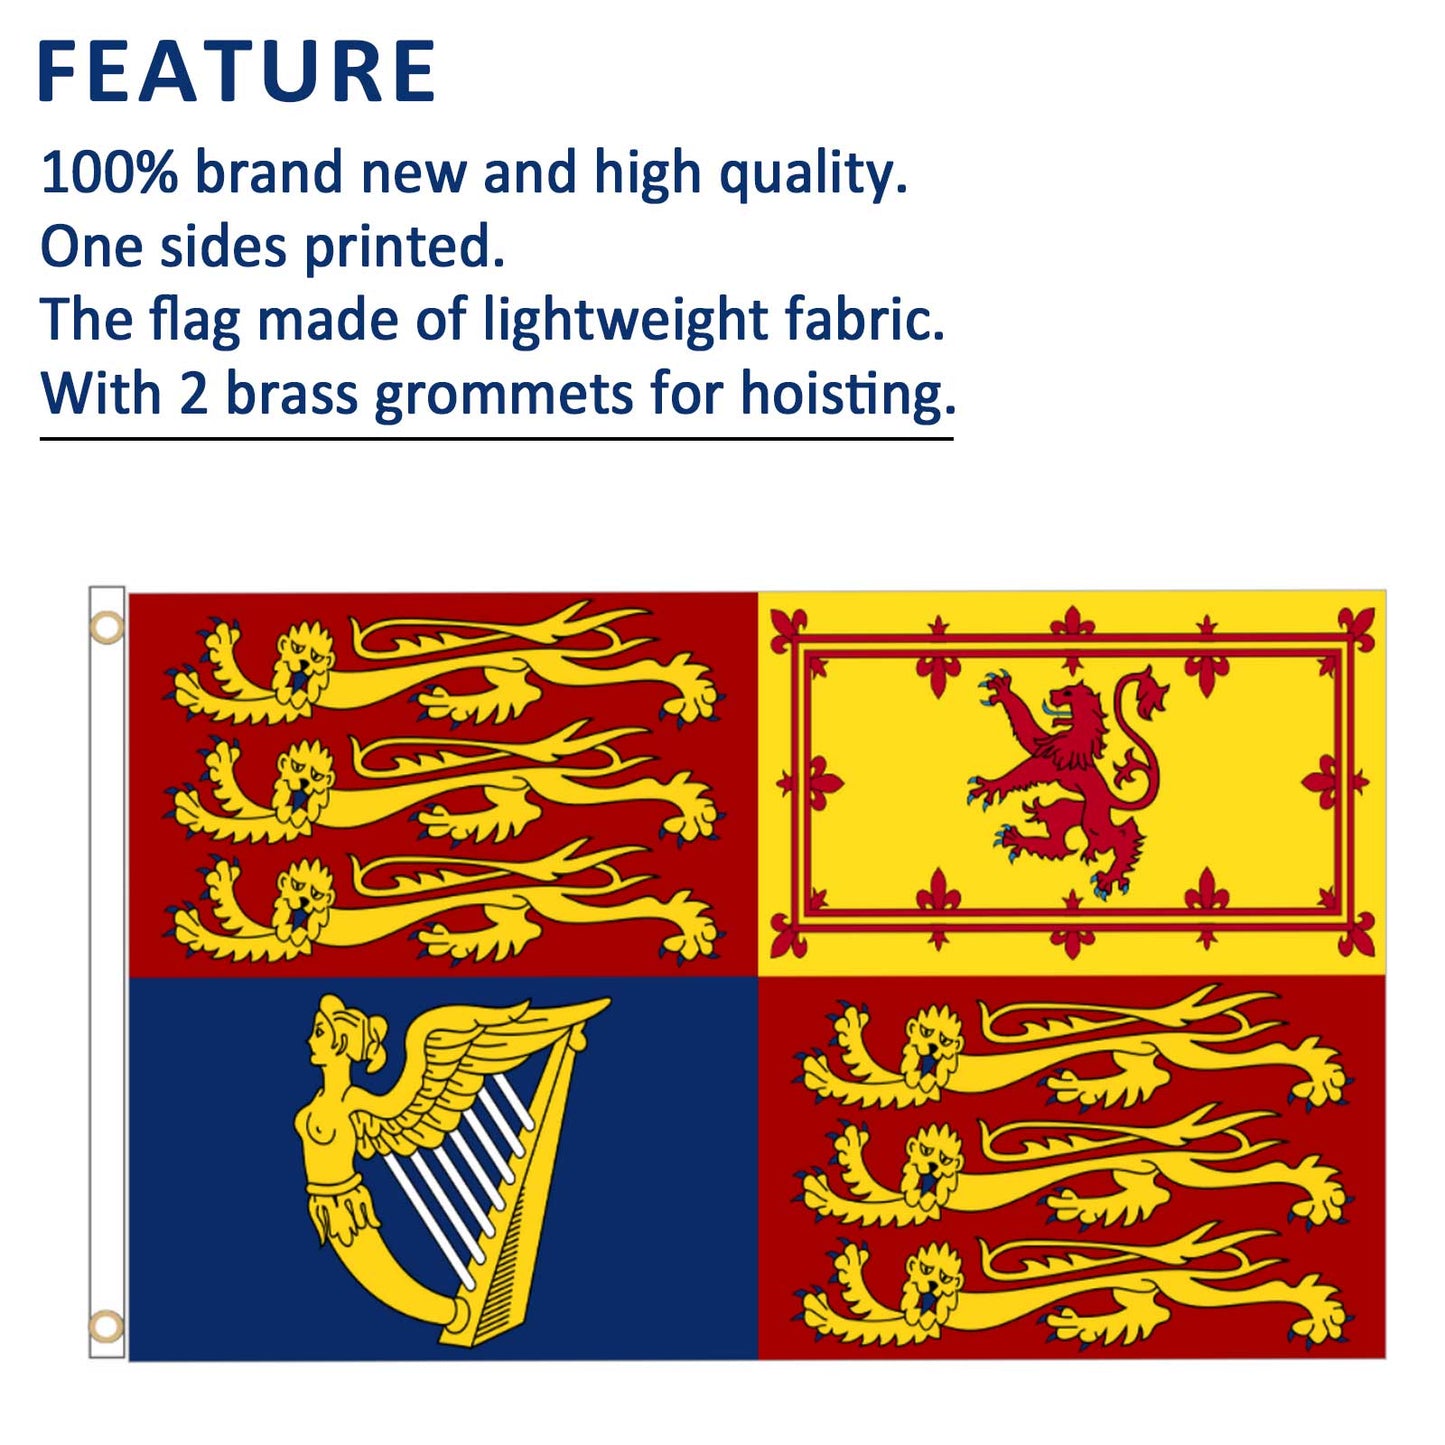 Queen Elizabeth II Platinum Jubilee 2022 God Save The Queen 5'x3' Polyester Flag